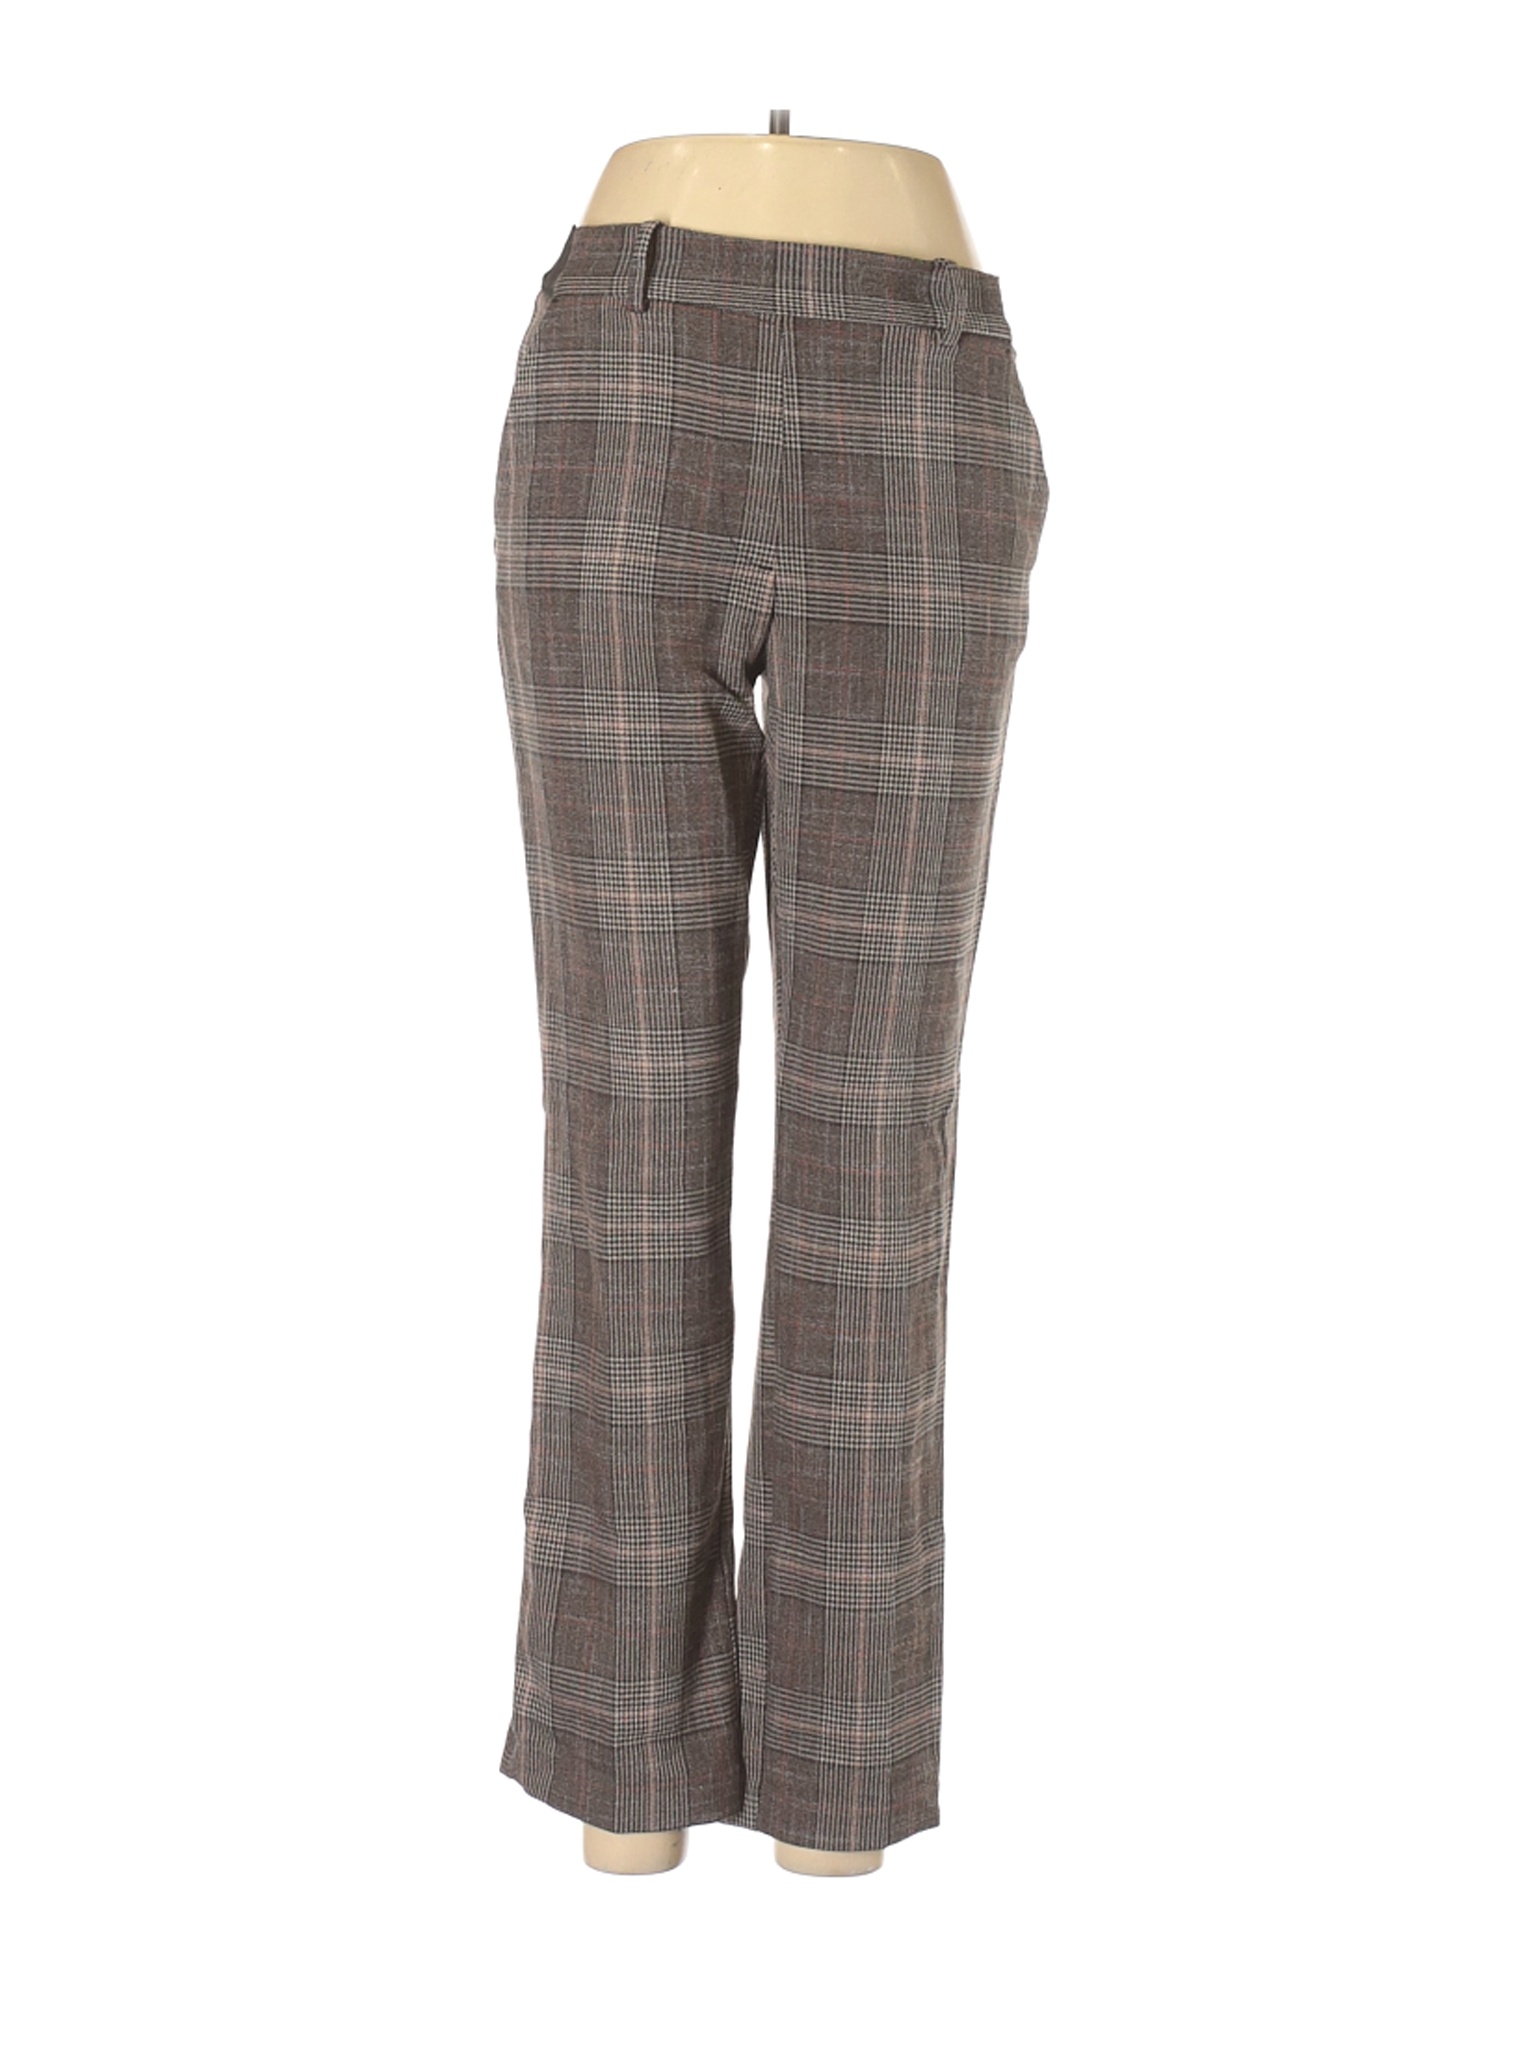 H&M Women Gray Casual Pants 6 | eBay